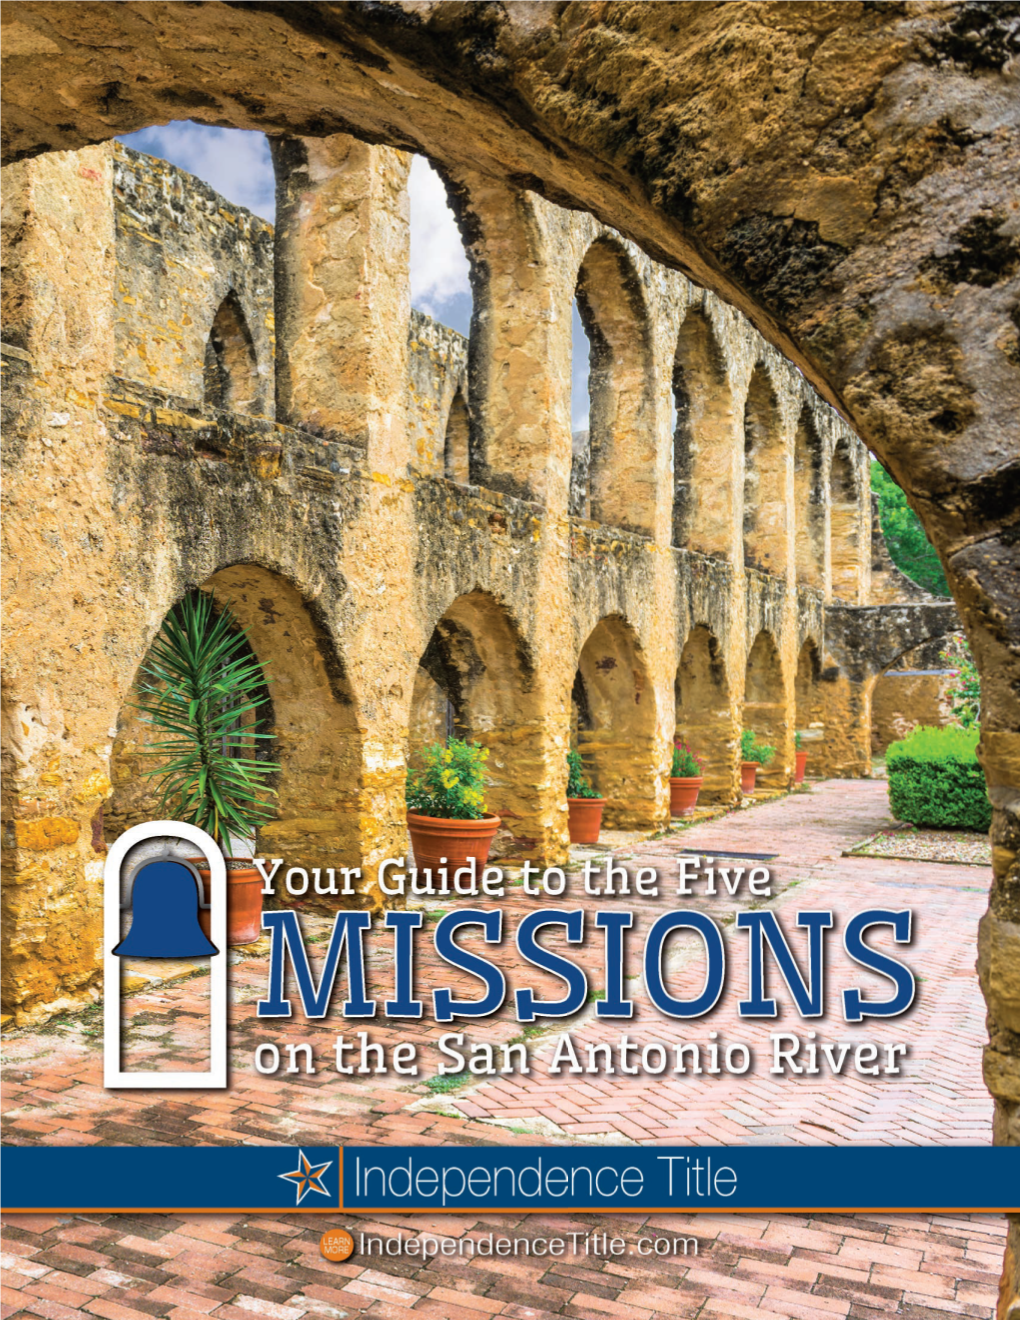 Missions on the San Antonio River